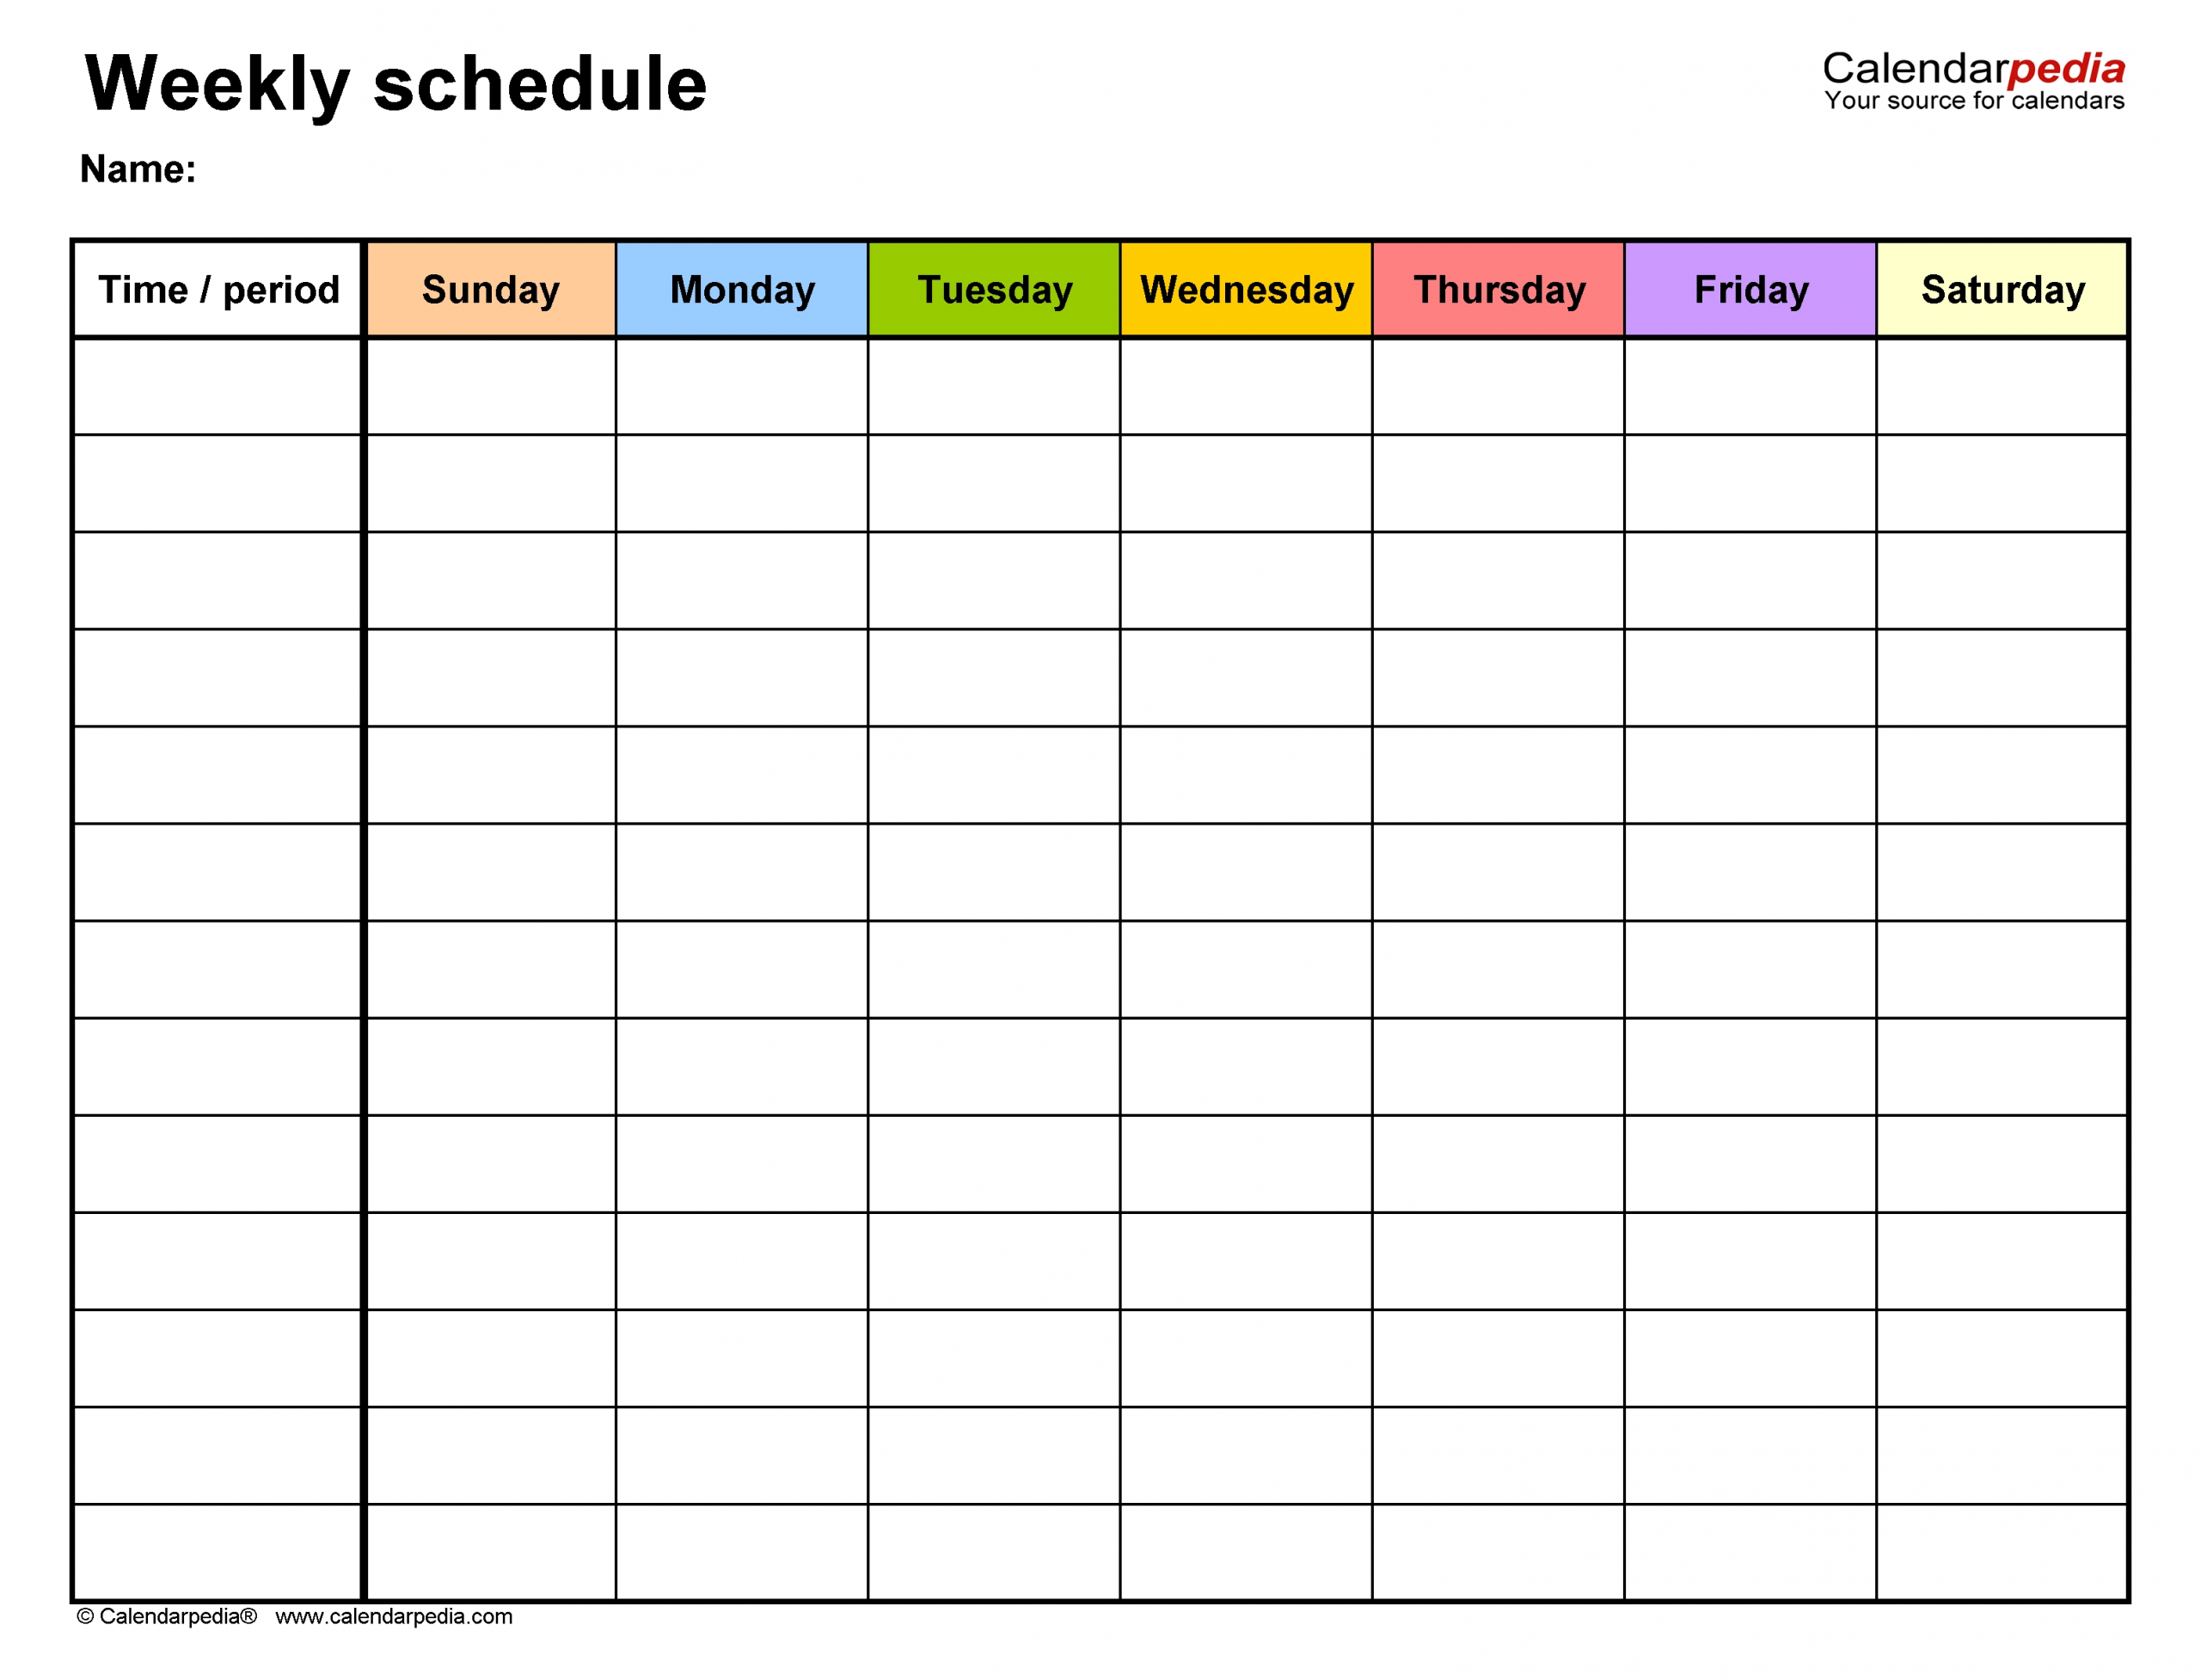 Get Calendar Online Editable Daily Time